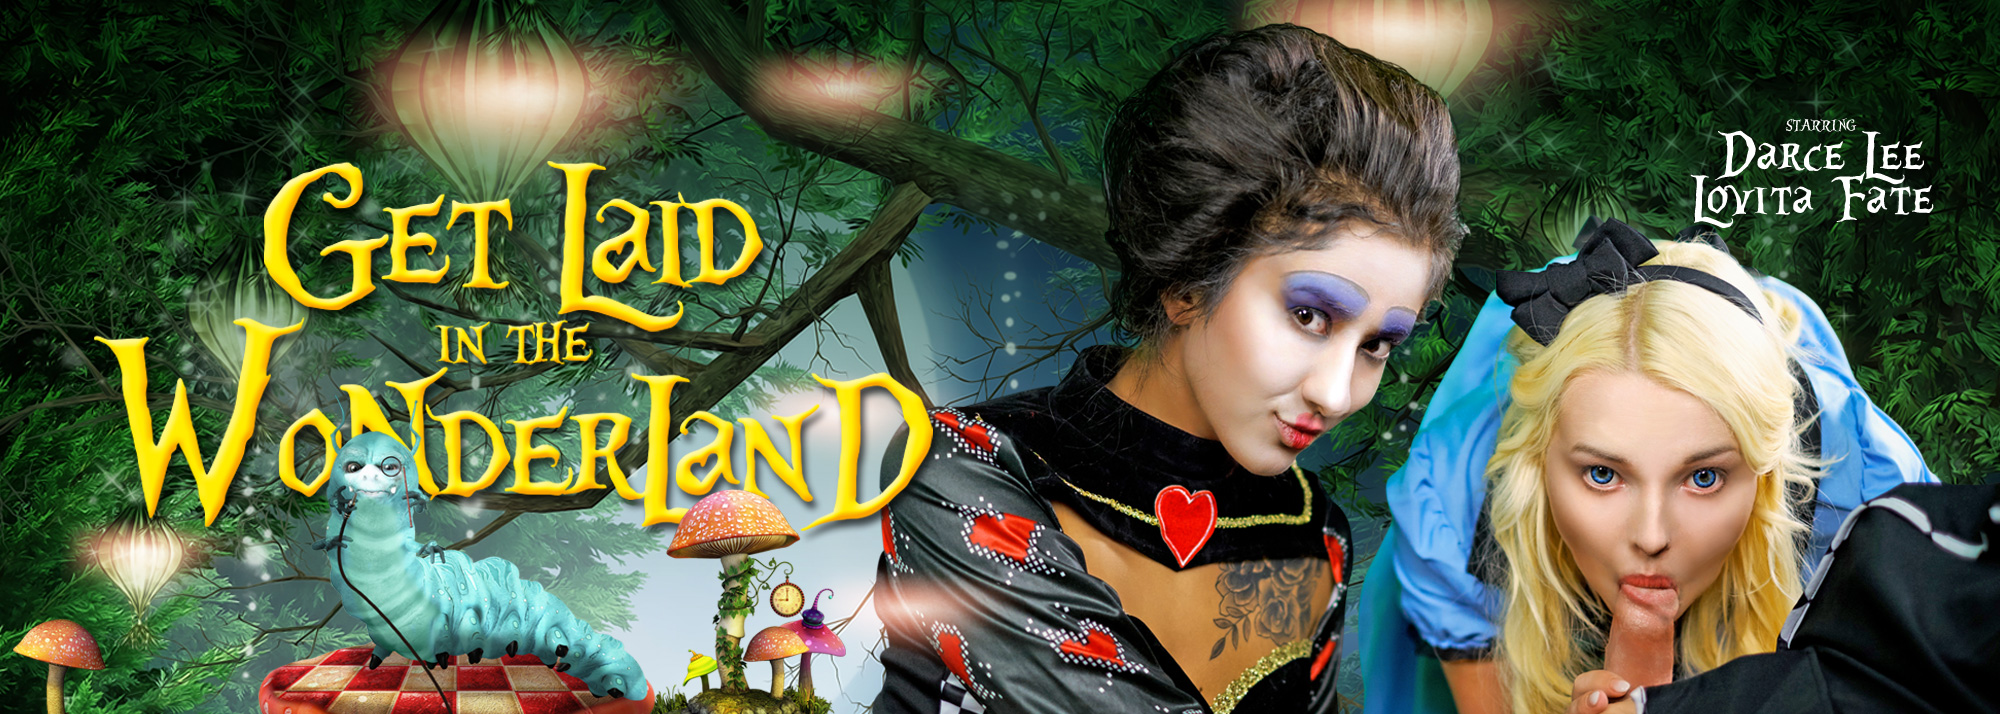 Get Laid In The Wonderland with Darce Lee  Slideshow